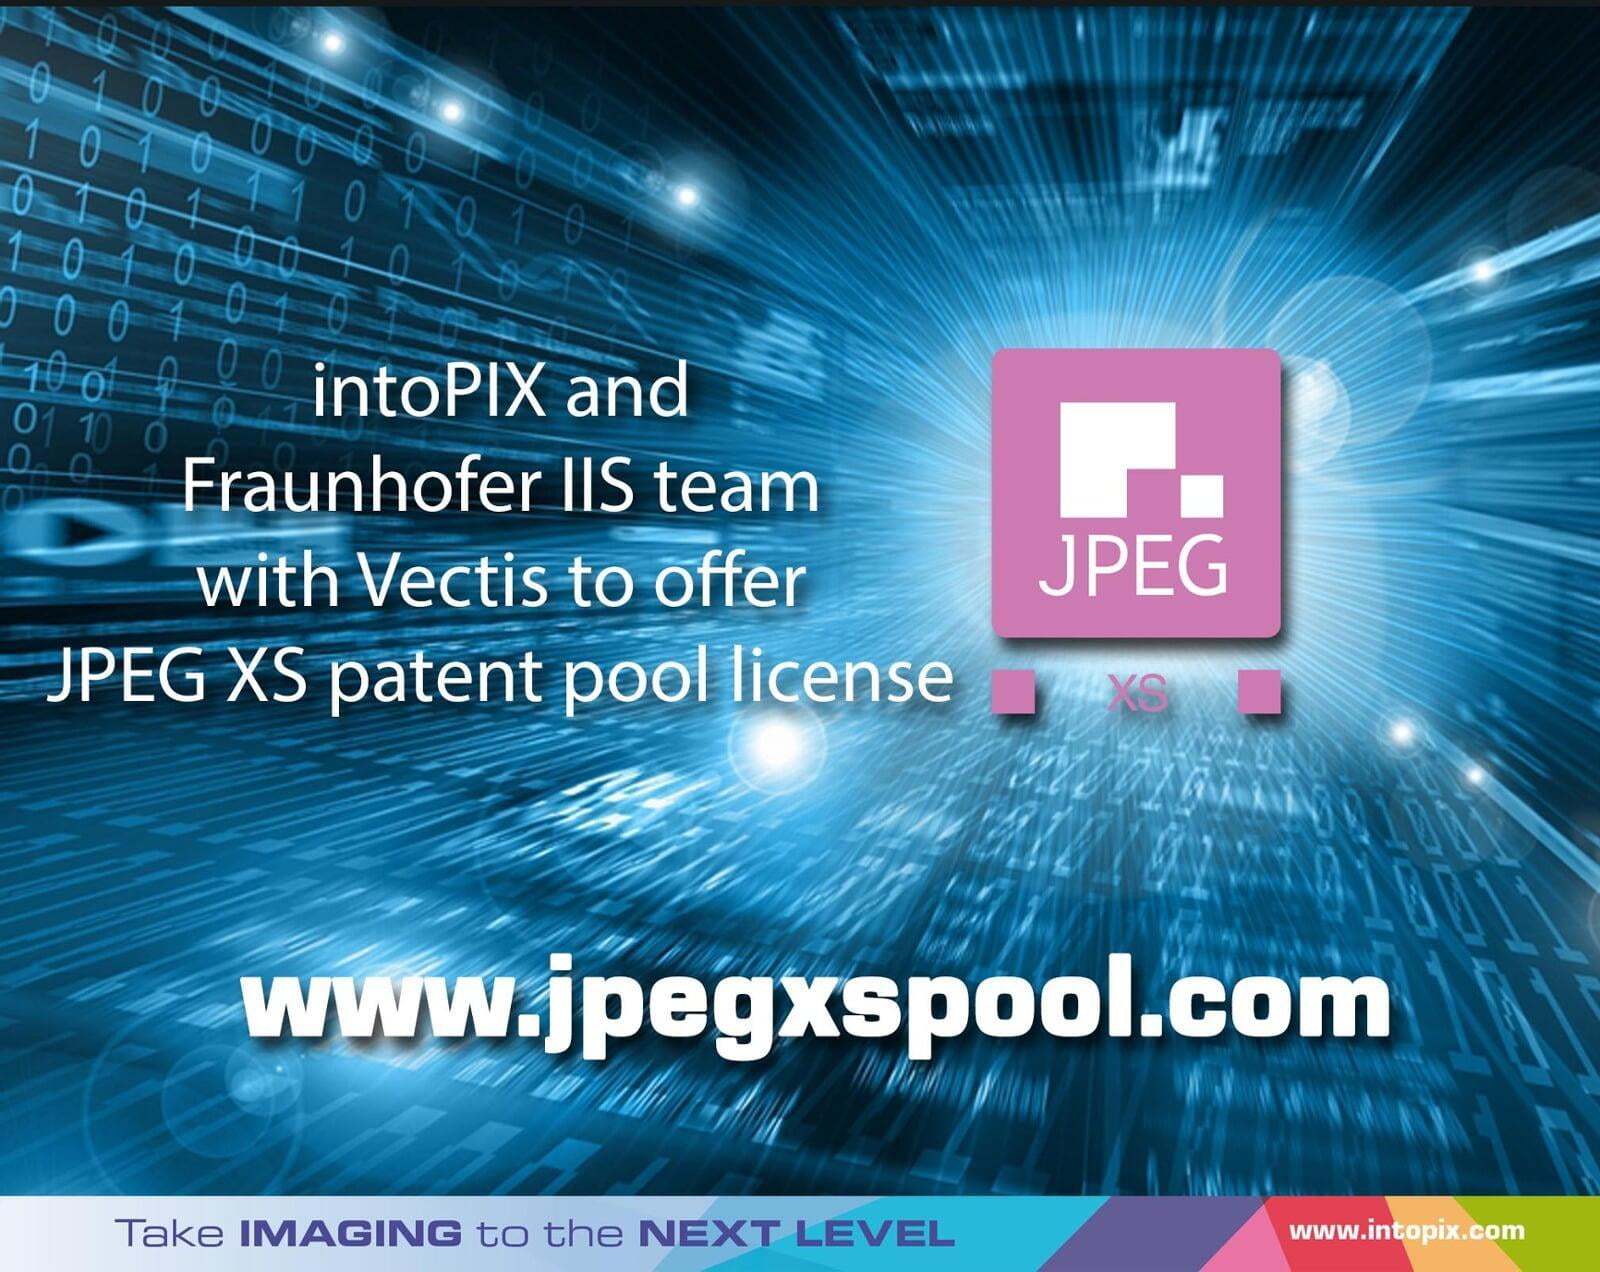 intoPIX 및 Fraunhofer IIS 팀, Vectis와 함께, JPEG XS 특허 풀 라이선스 제공